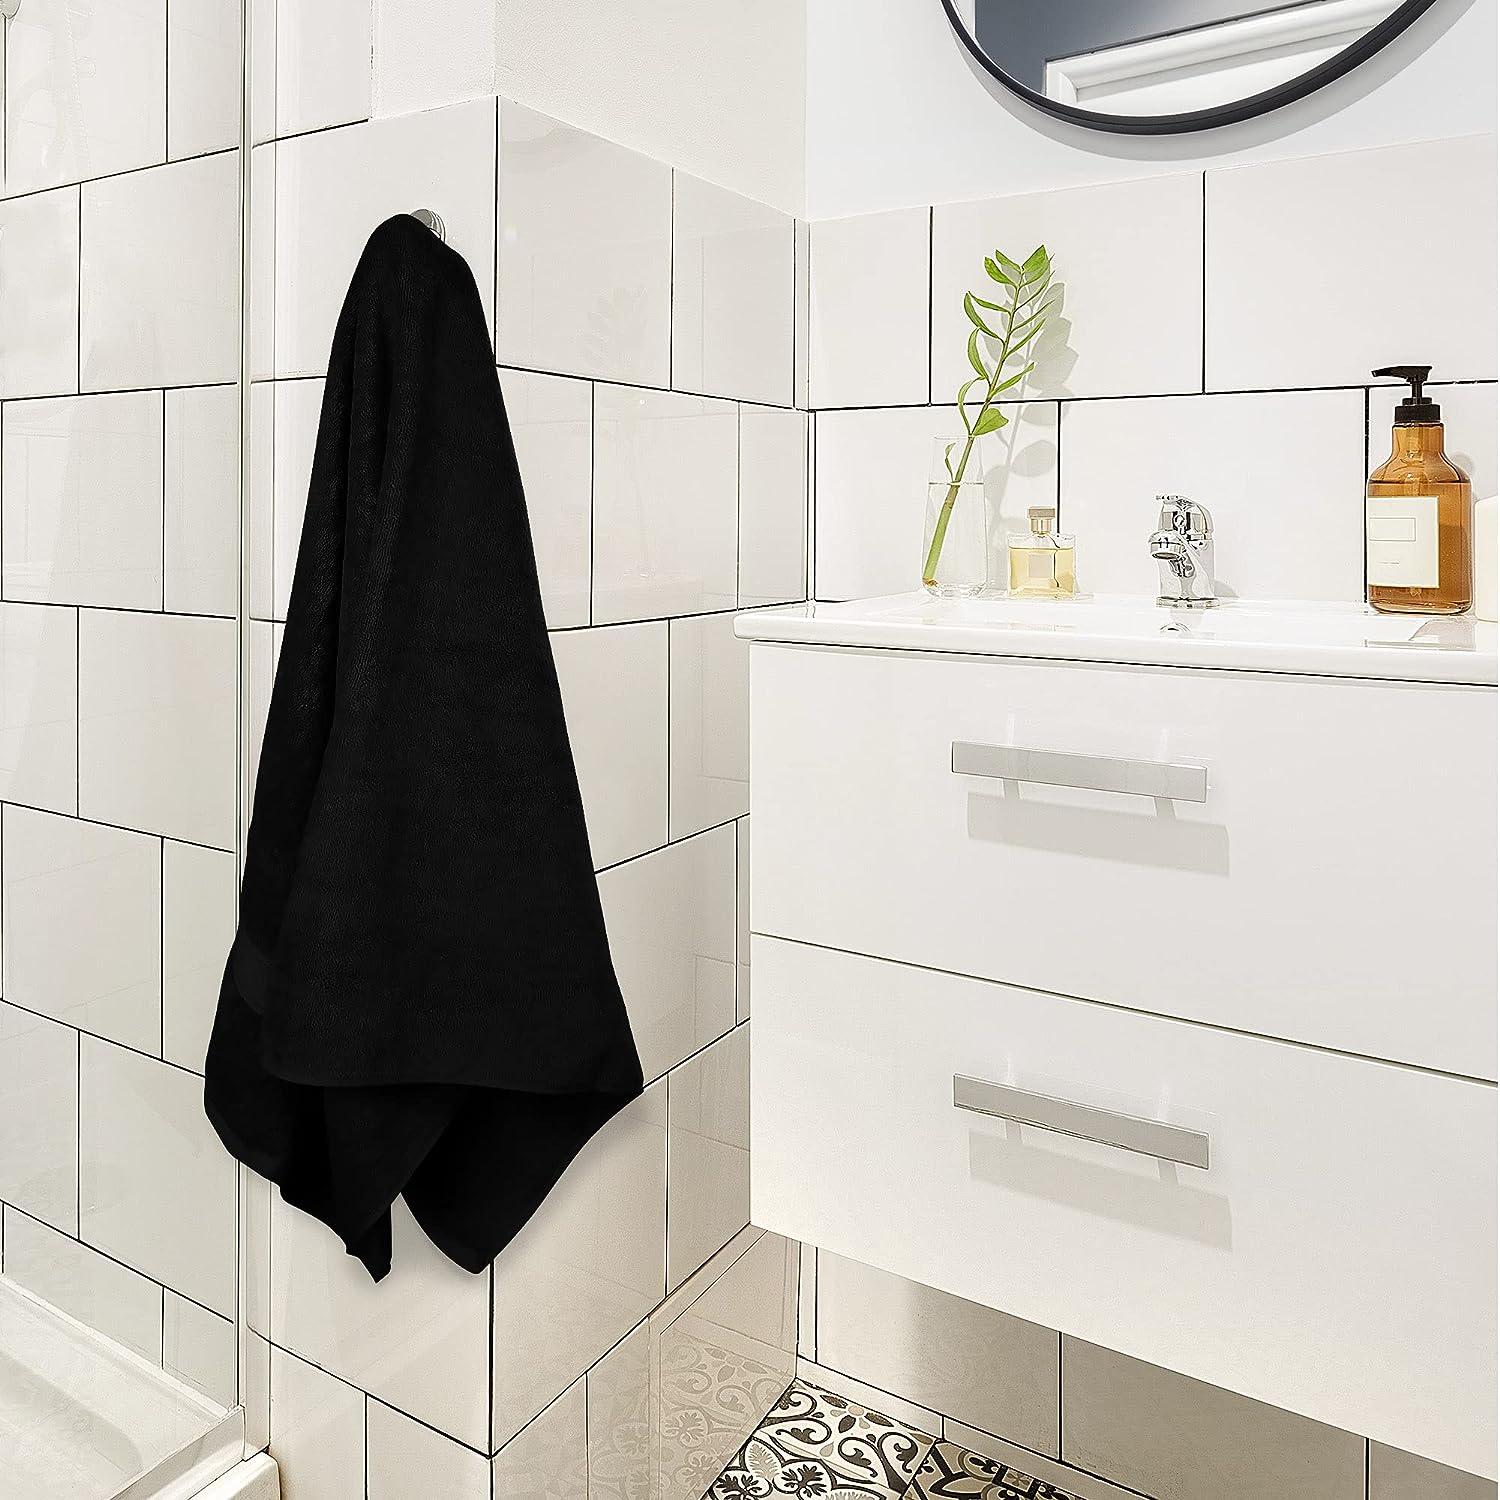 Utopia Towels 4 Pack Premium Bath Towels Set, (27 x 54 Inches) 100